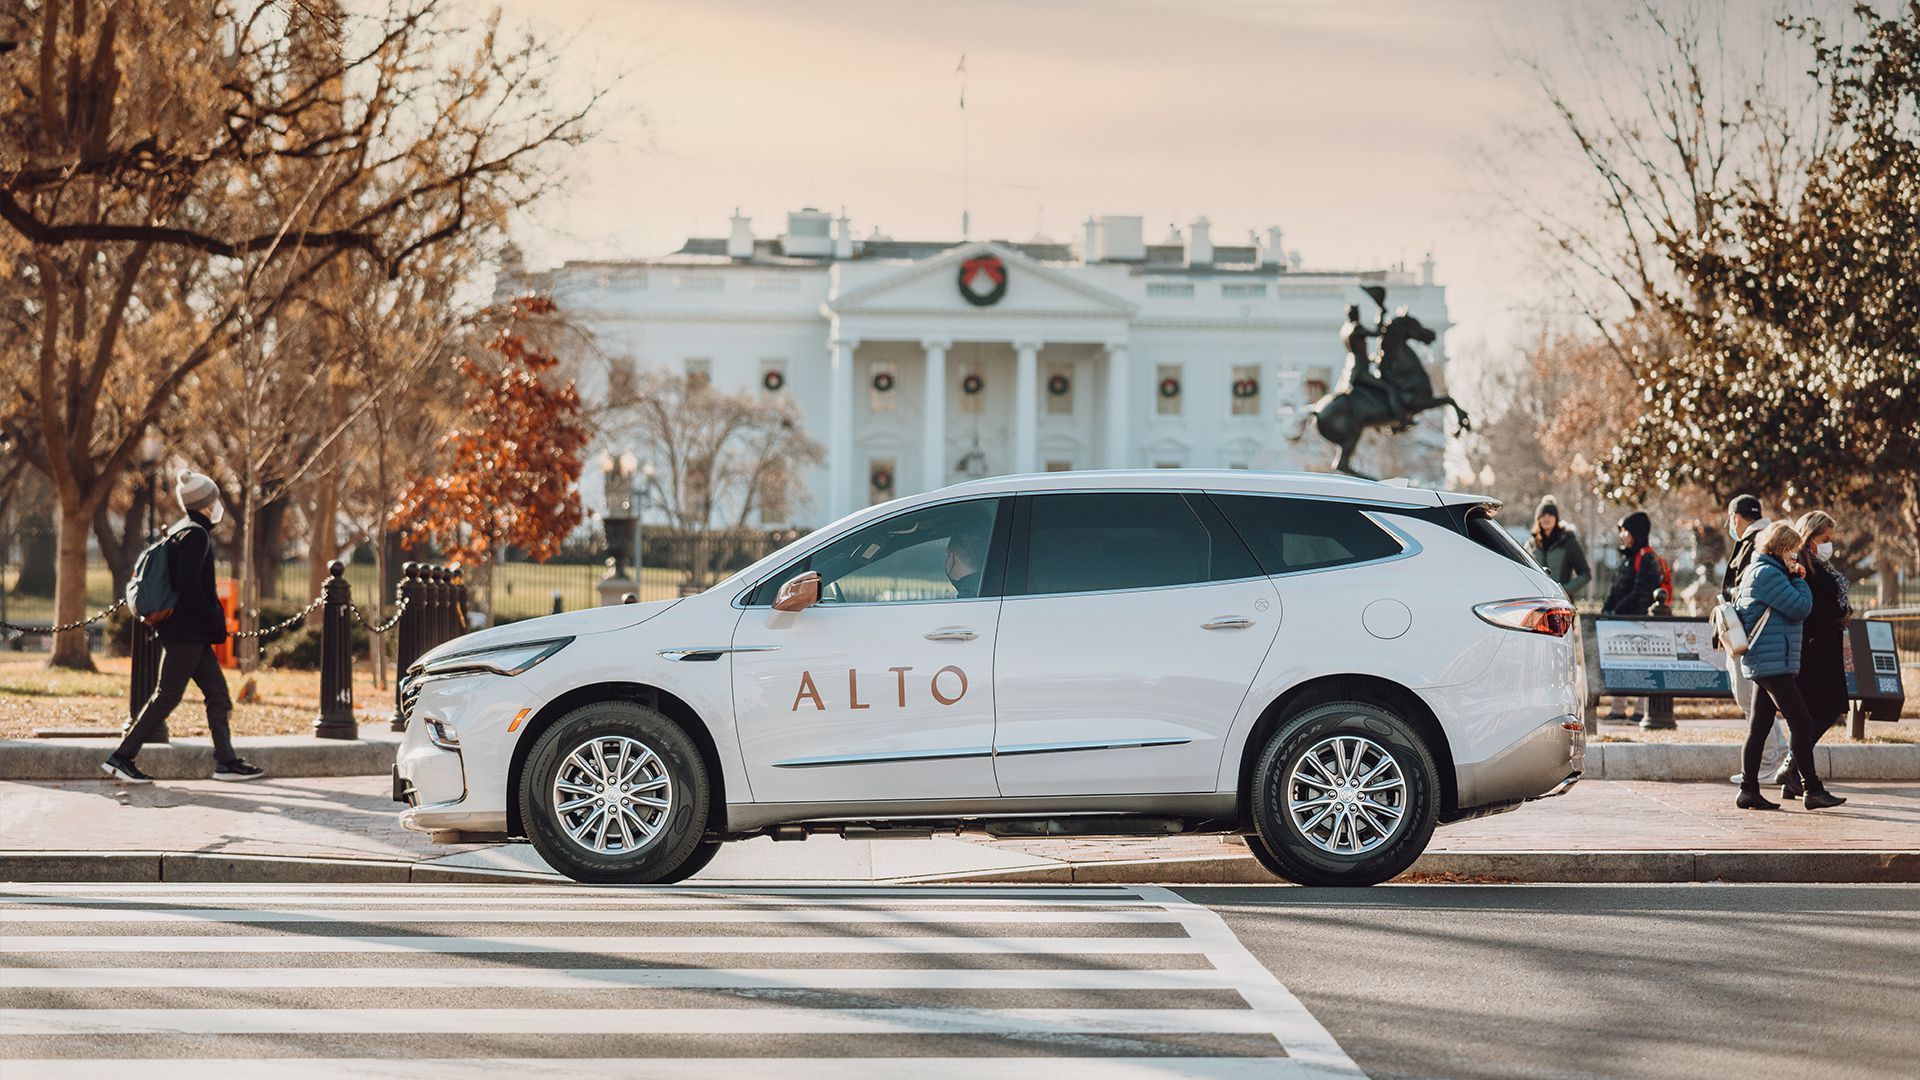 Alto's ride-hailing hailing vehicle in Washington, D.C. 